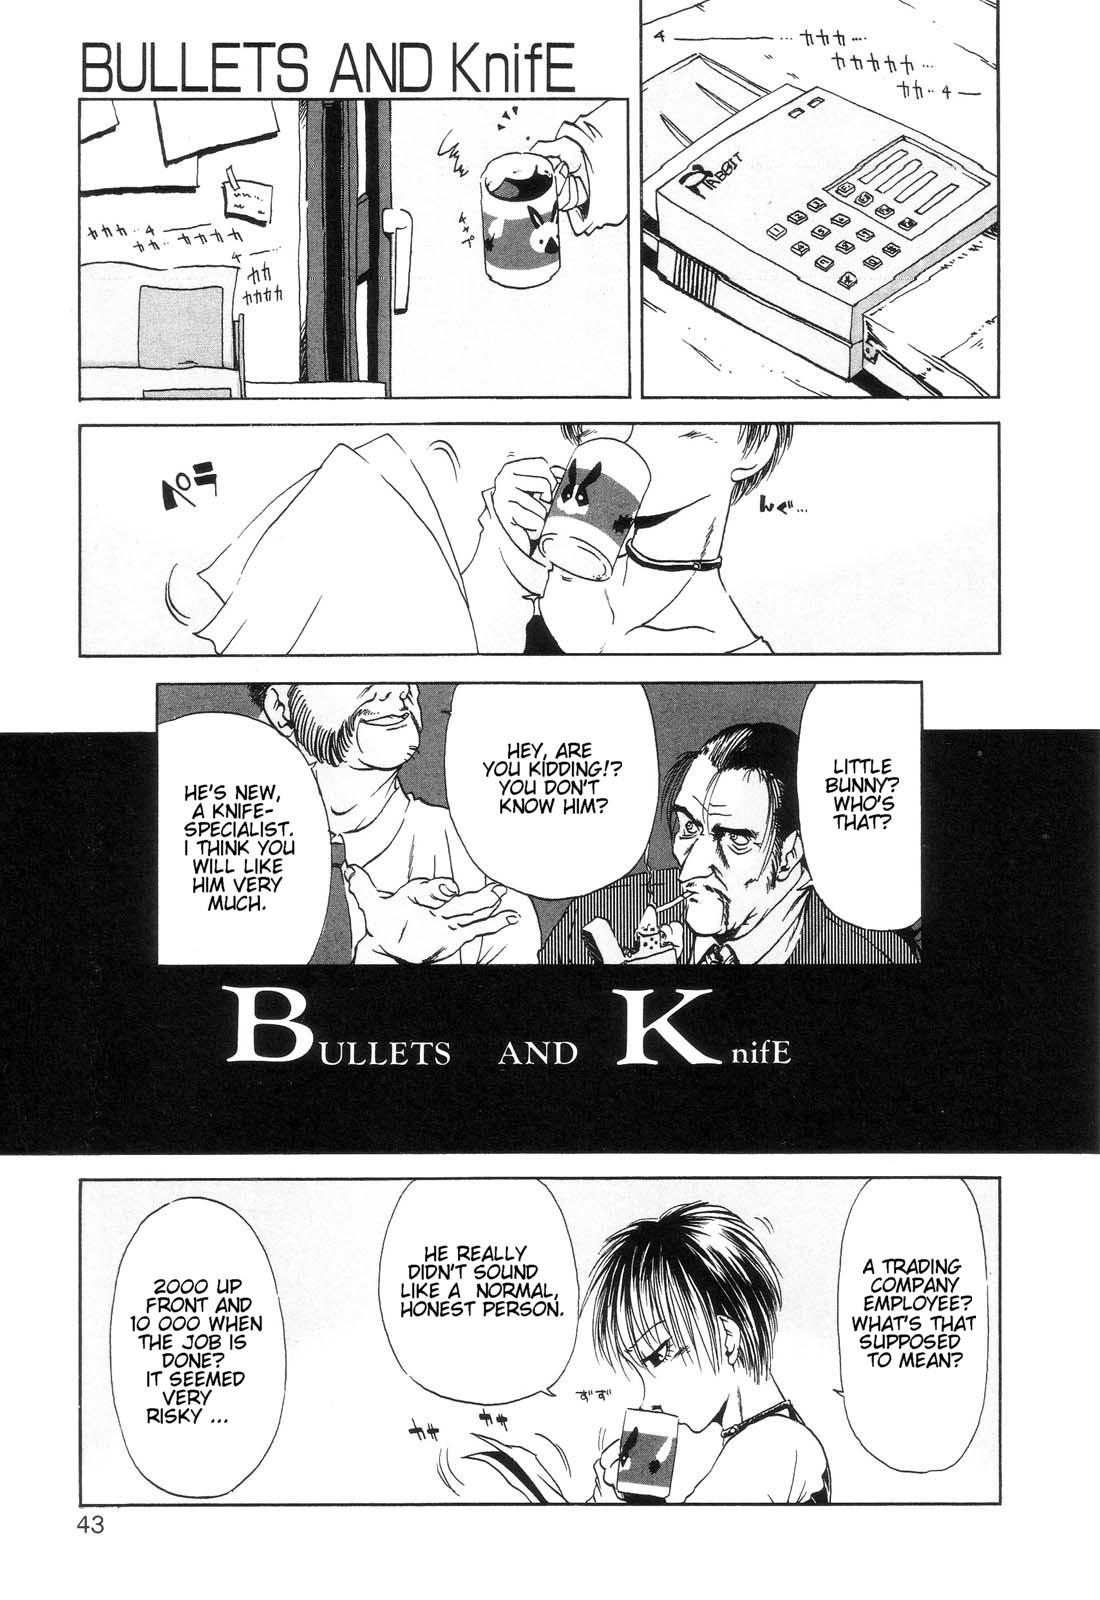 Gang Akiba Oze - Bullets and Knife Gayfuck - Page 1